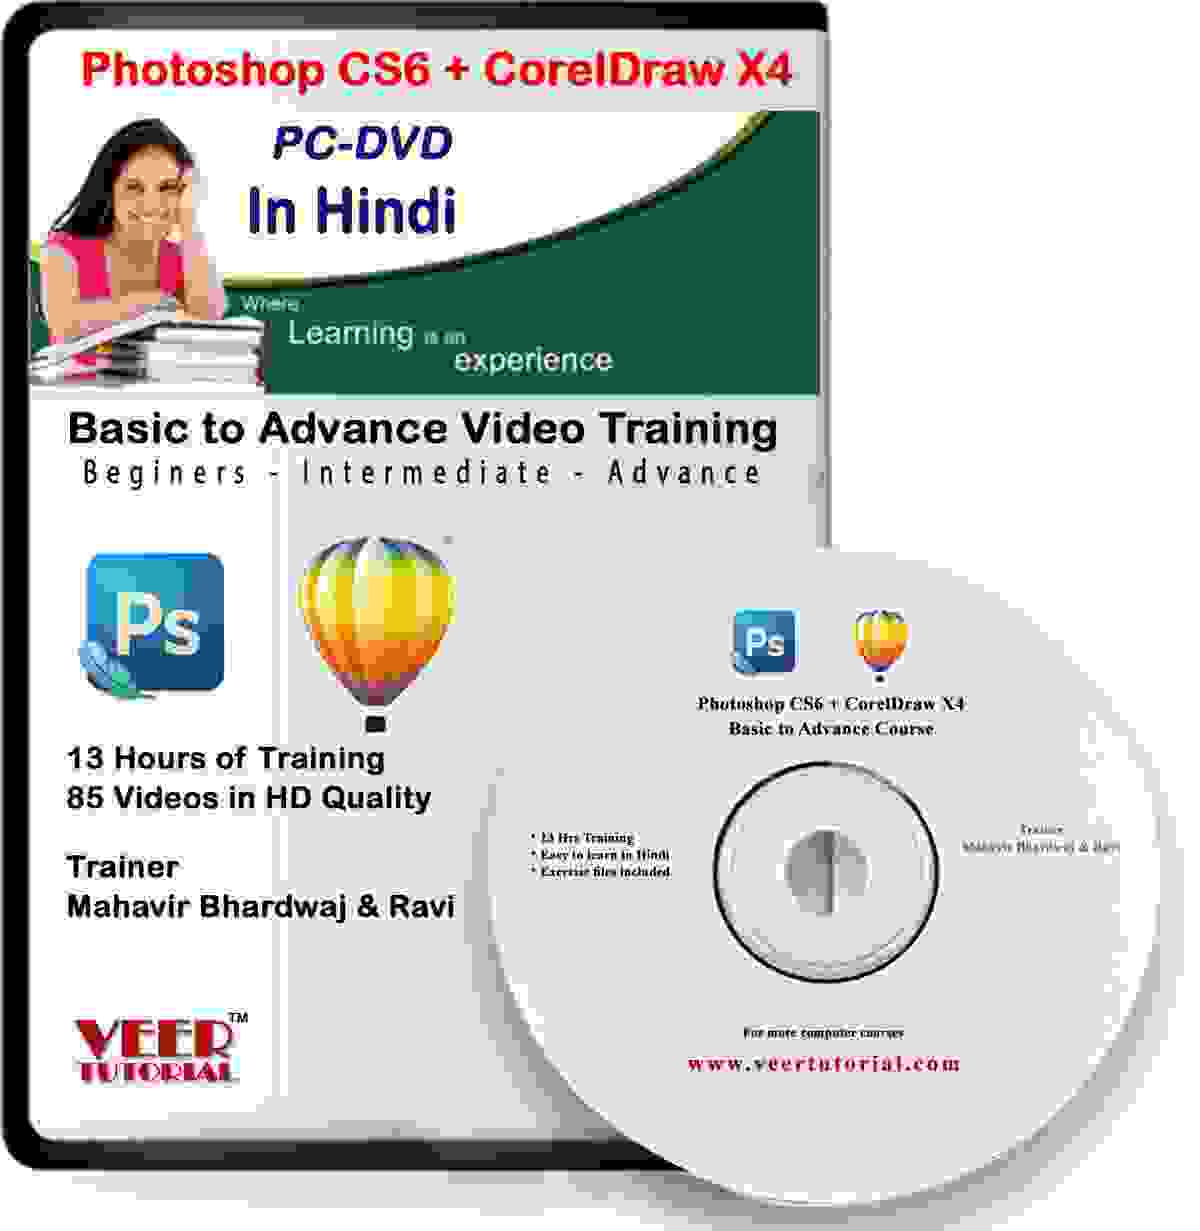 Corel+photoshop Tutorial Dvd | Photoshop Coreldraw Tutorials DVD Price 23 May 2022 Photoshop Tutorial Hindi Dvd online shop - HelpingIndia